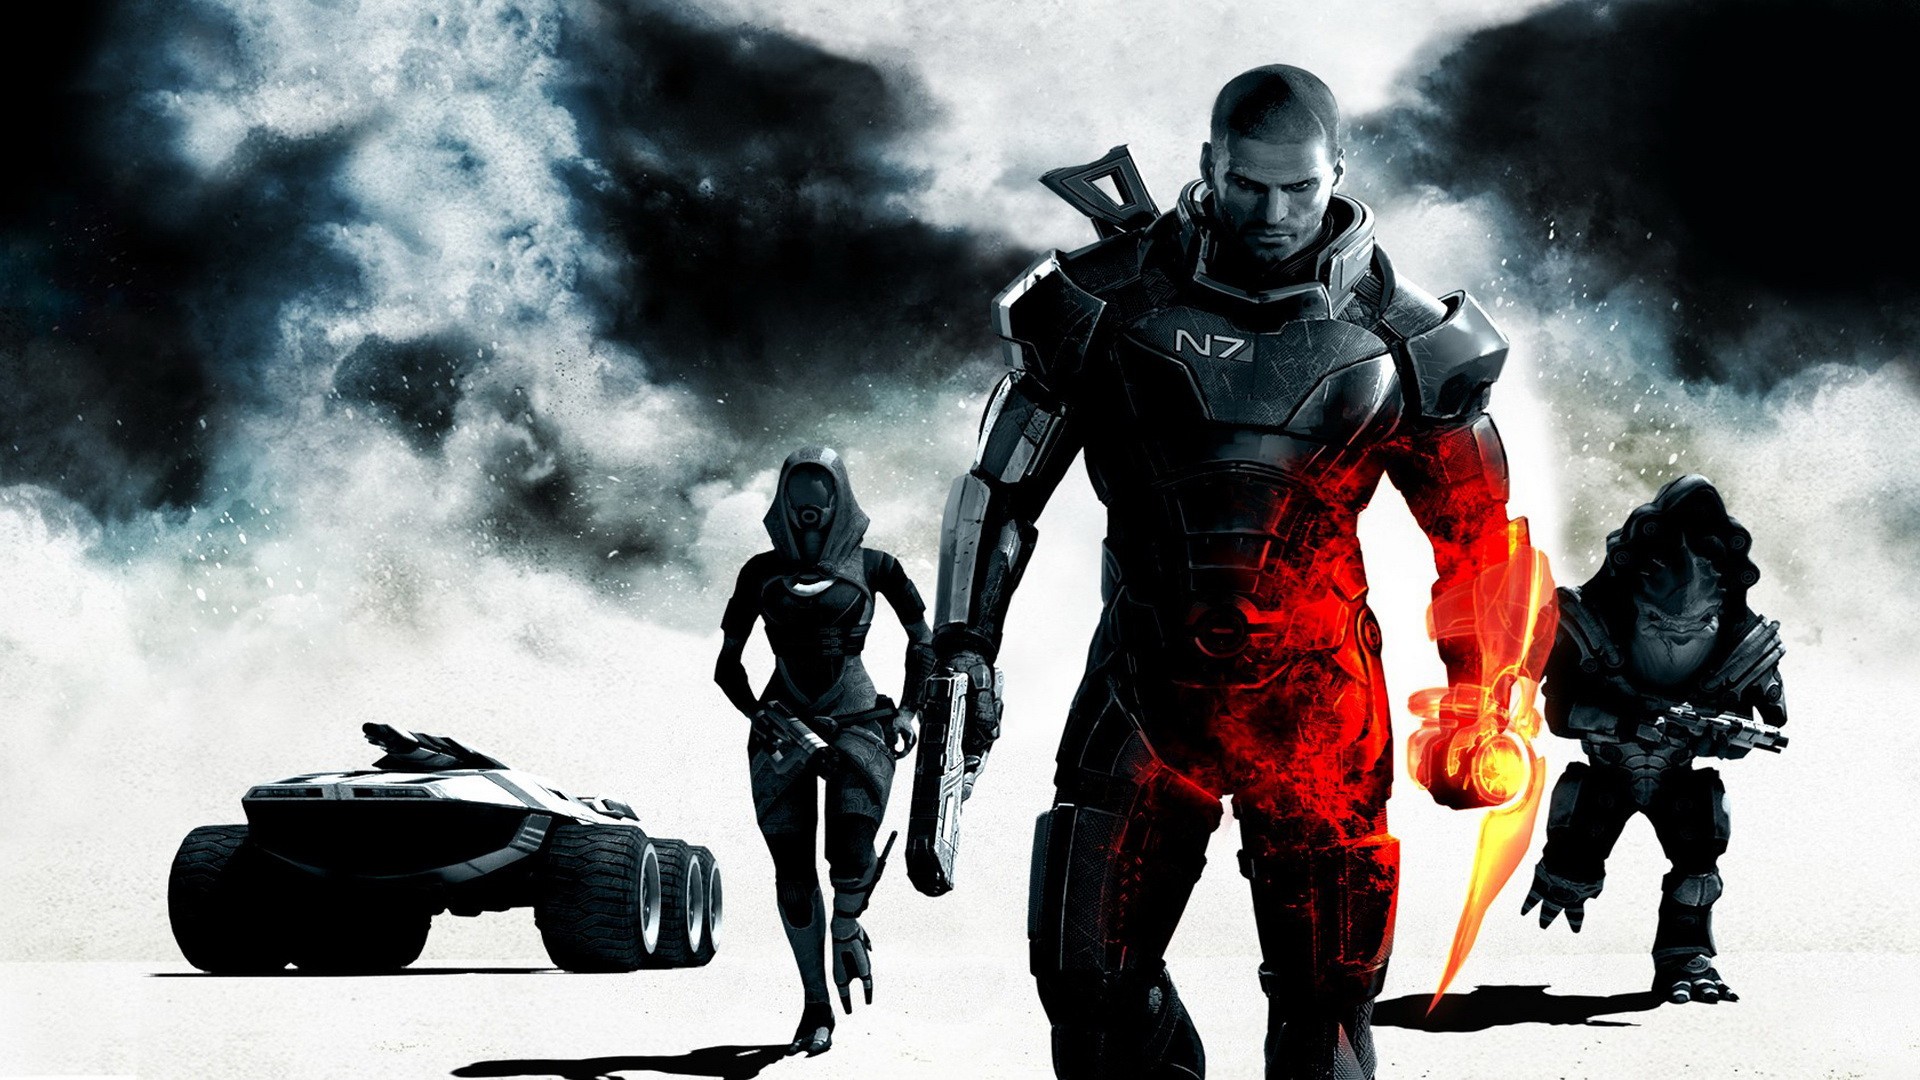 General 1920x1080 Mass Effect video games Battlefield (game) krogan digital art EA Games science fiction video game men video game art gun weapon futuristic armor